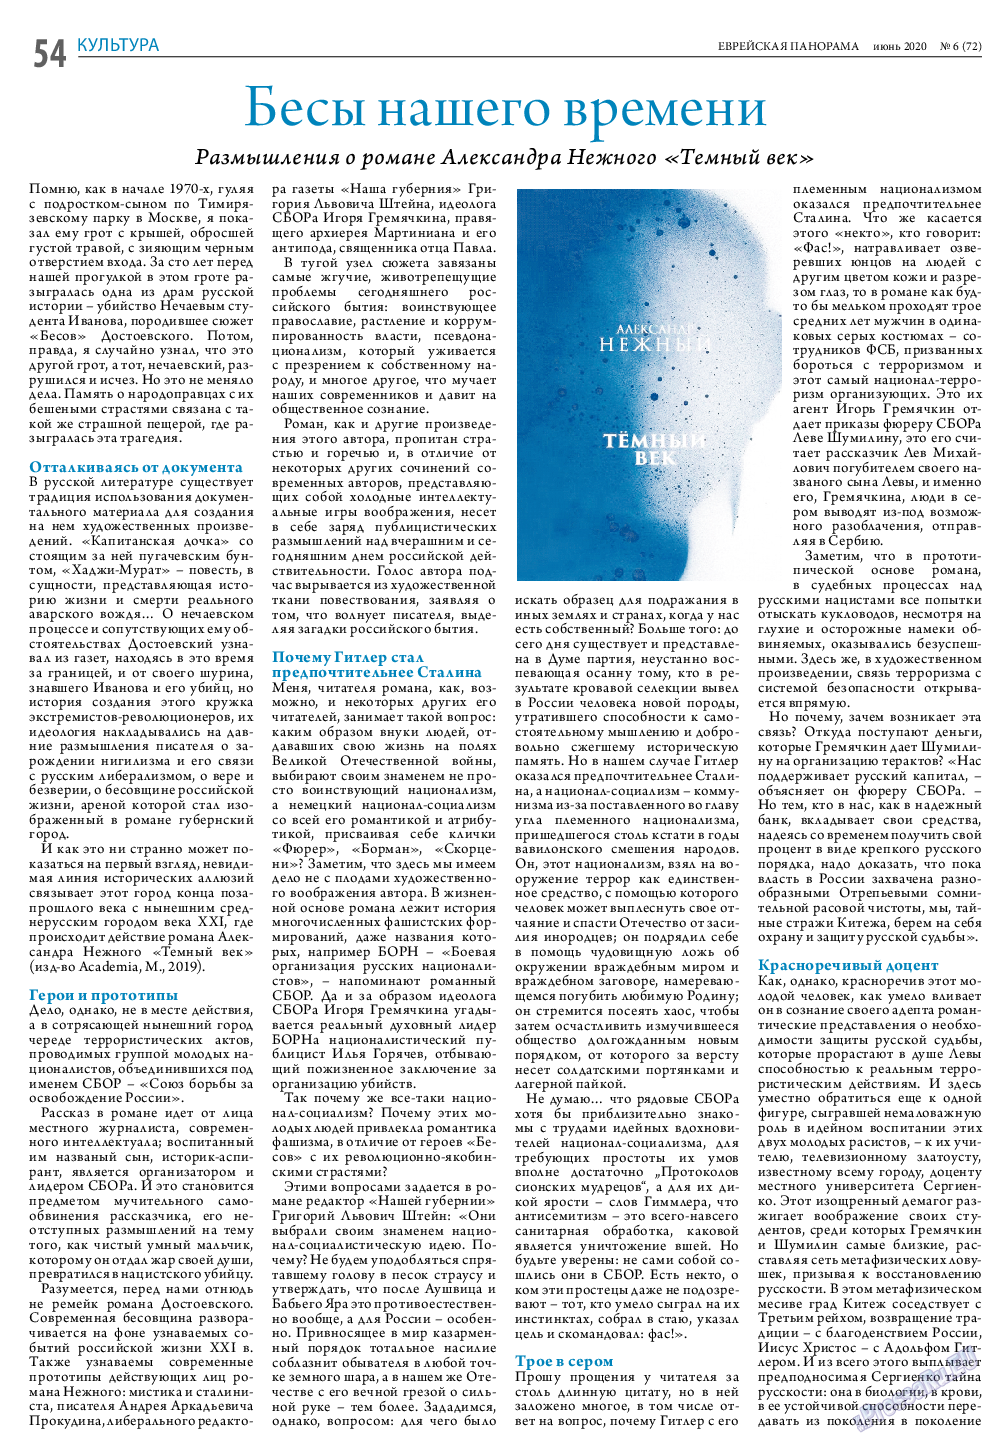 Еврейская панорама, газета. 2020 №6 стр.54